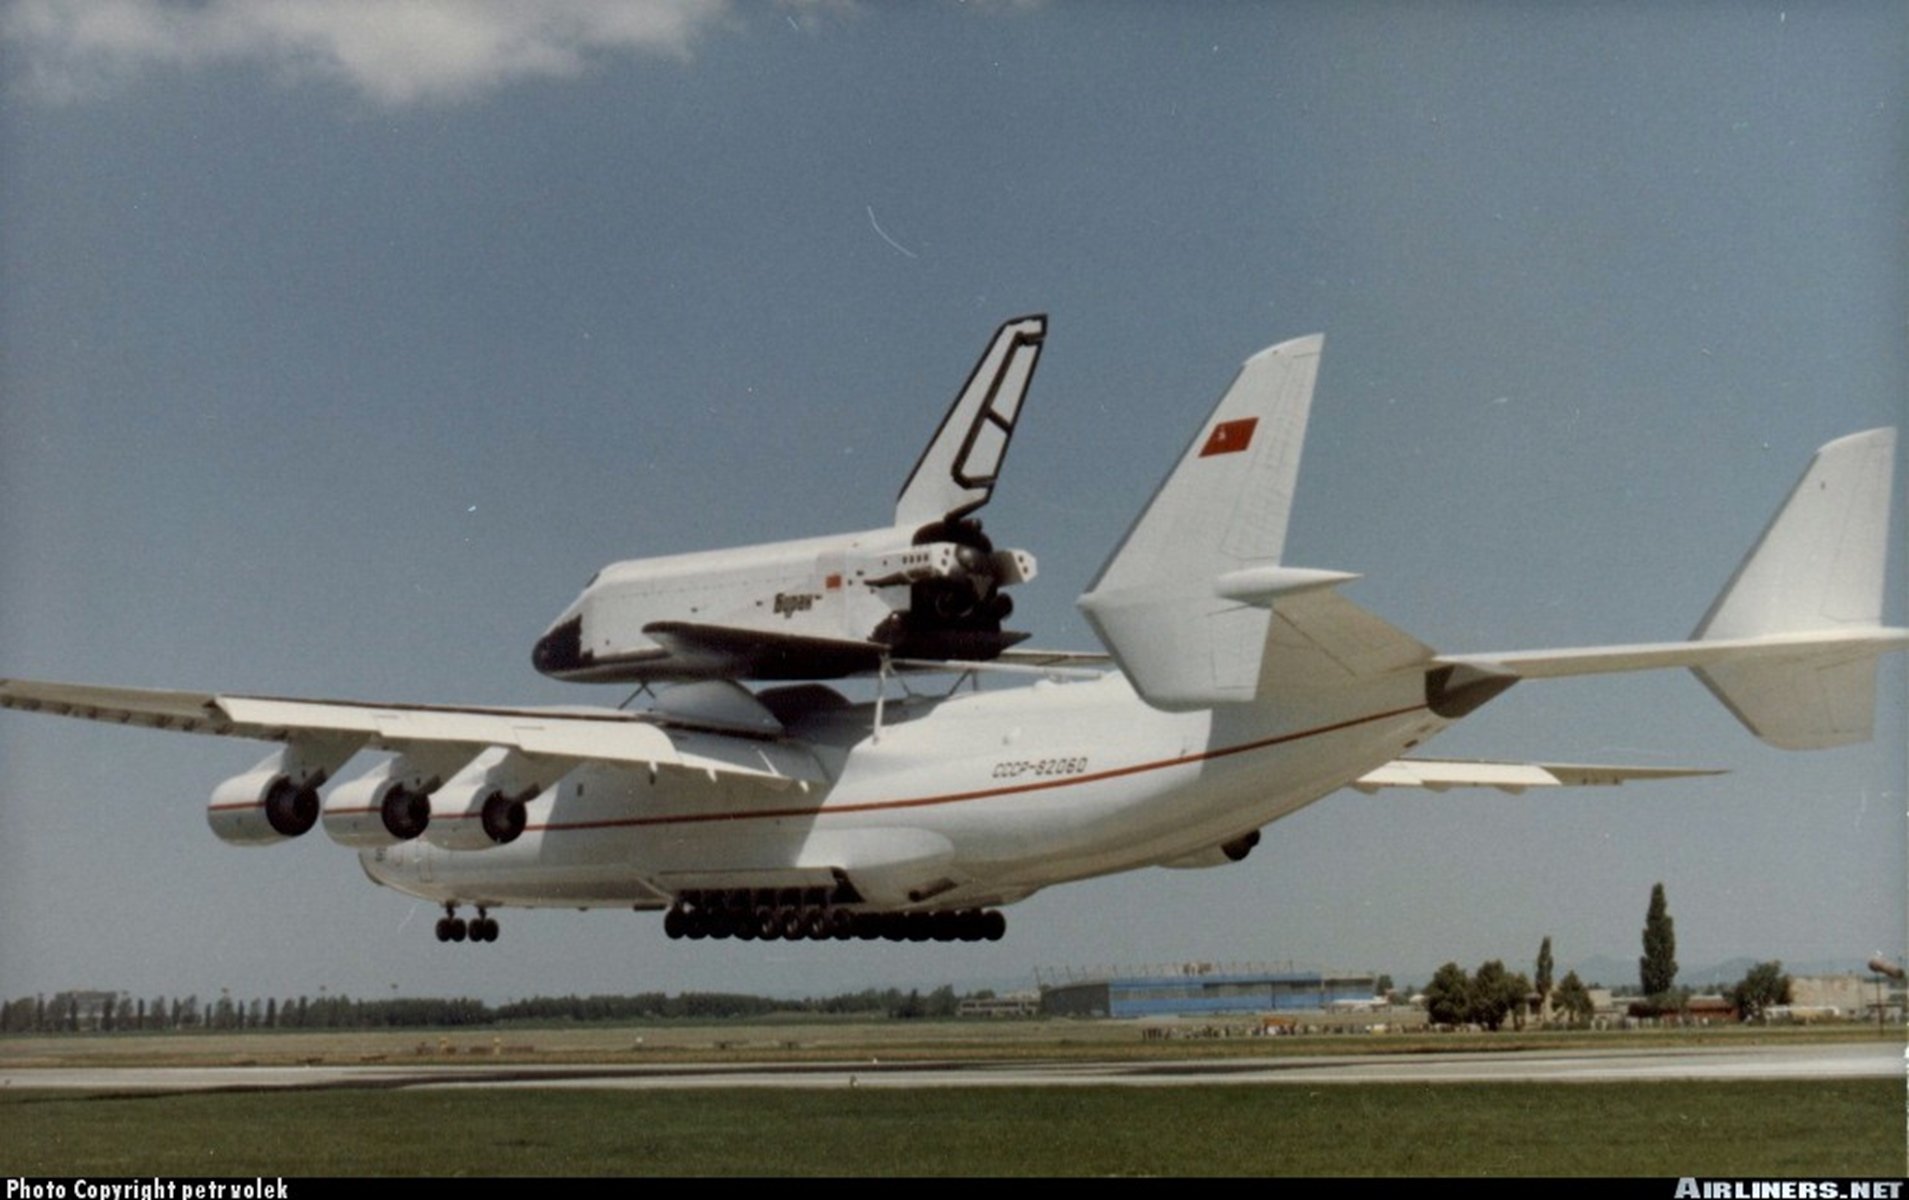 russian space shuttle copied